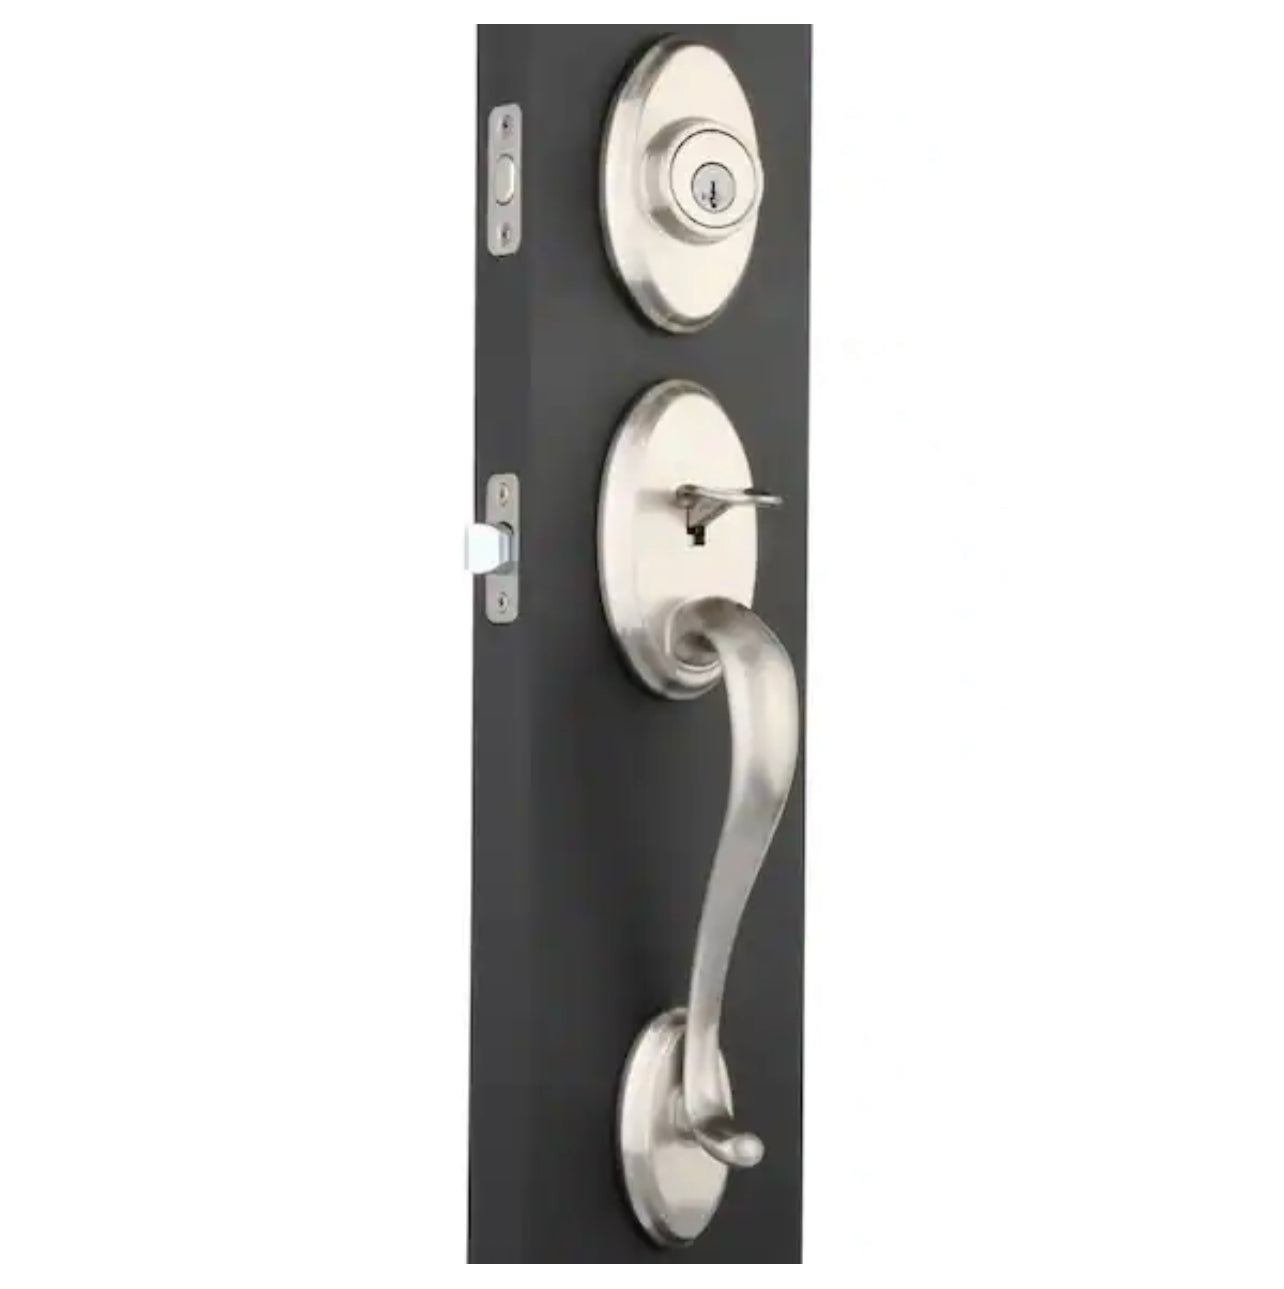 Kwikset Shelburne Satin Nickel Single Cylinder Door Handleset with Tustin Door Handle Featuring SmartKey Security Damaged Box